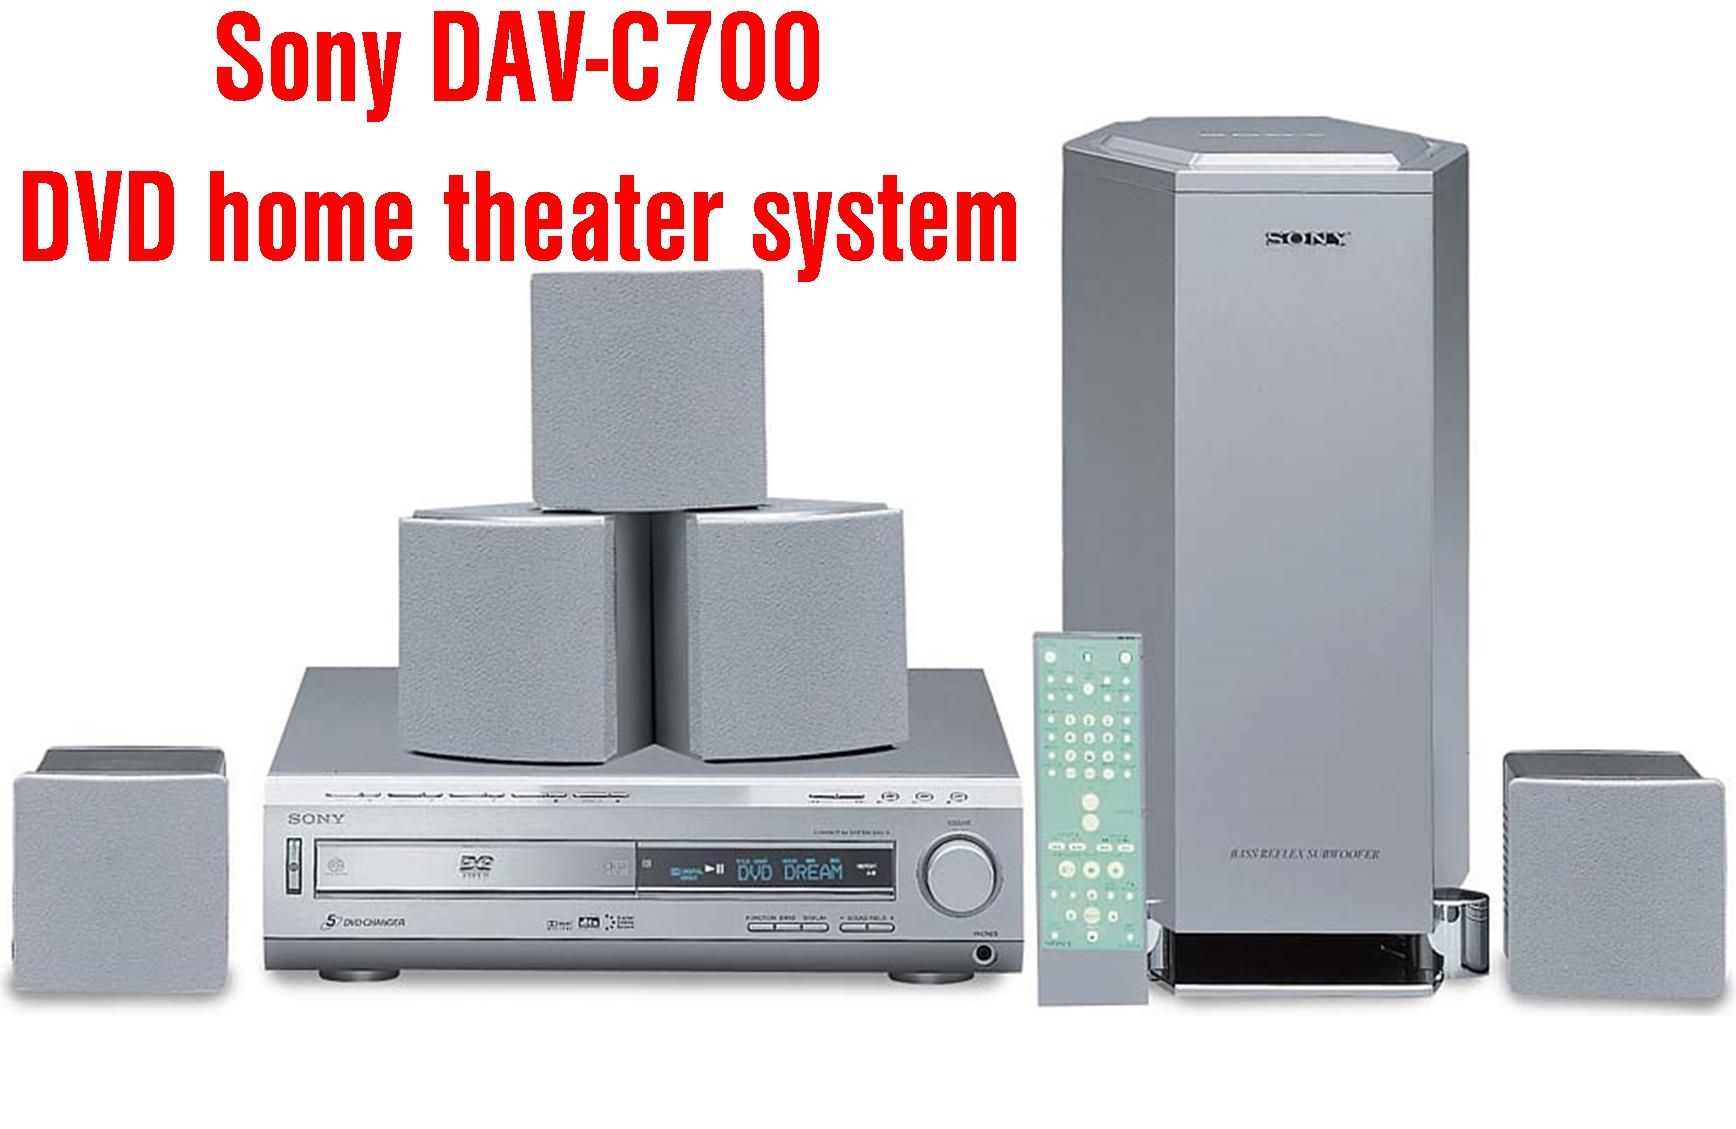 Sony DAV-C700 DVD home theater system